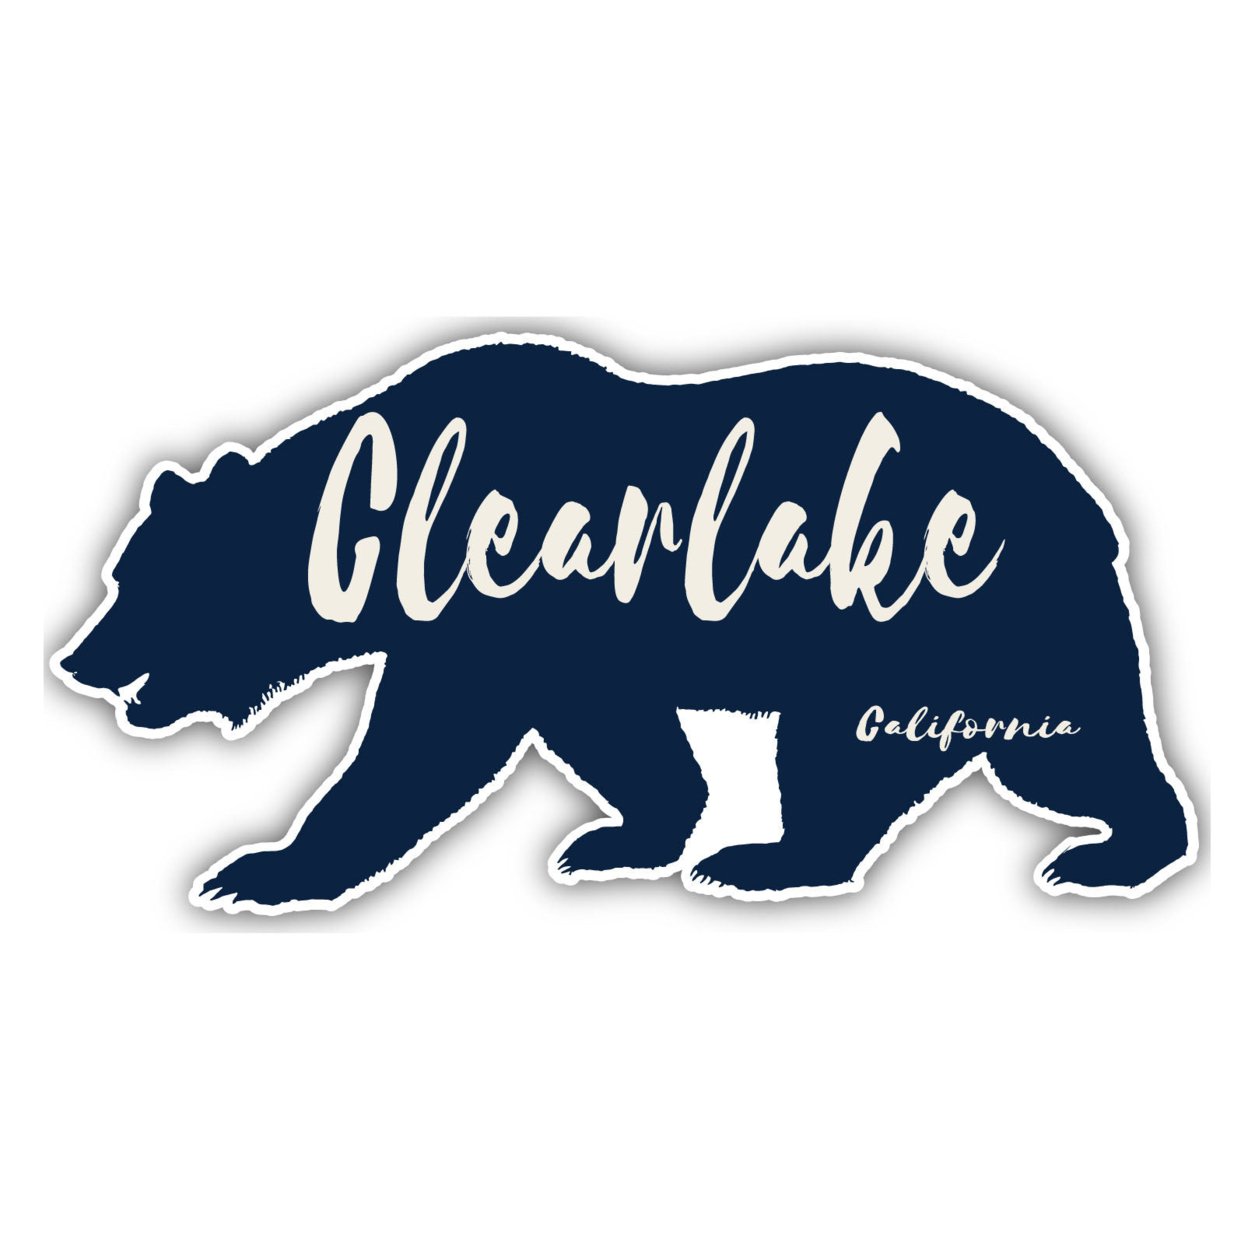 Clearlake California Souvenir Decorative Stickers (Choose Theme And Size) - Single Unit, 6-Inch, Tent